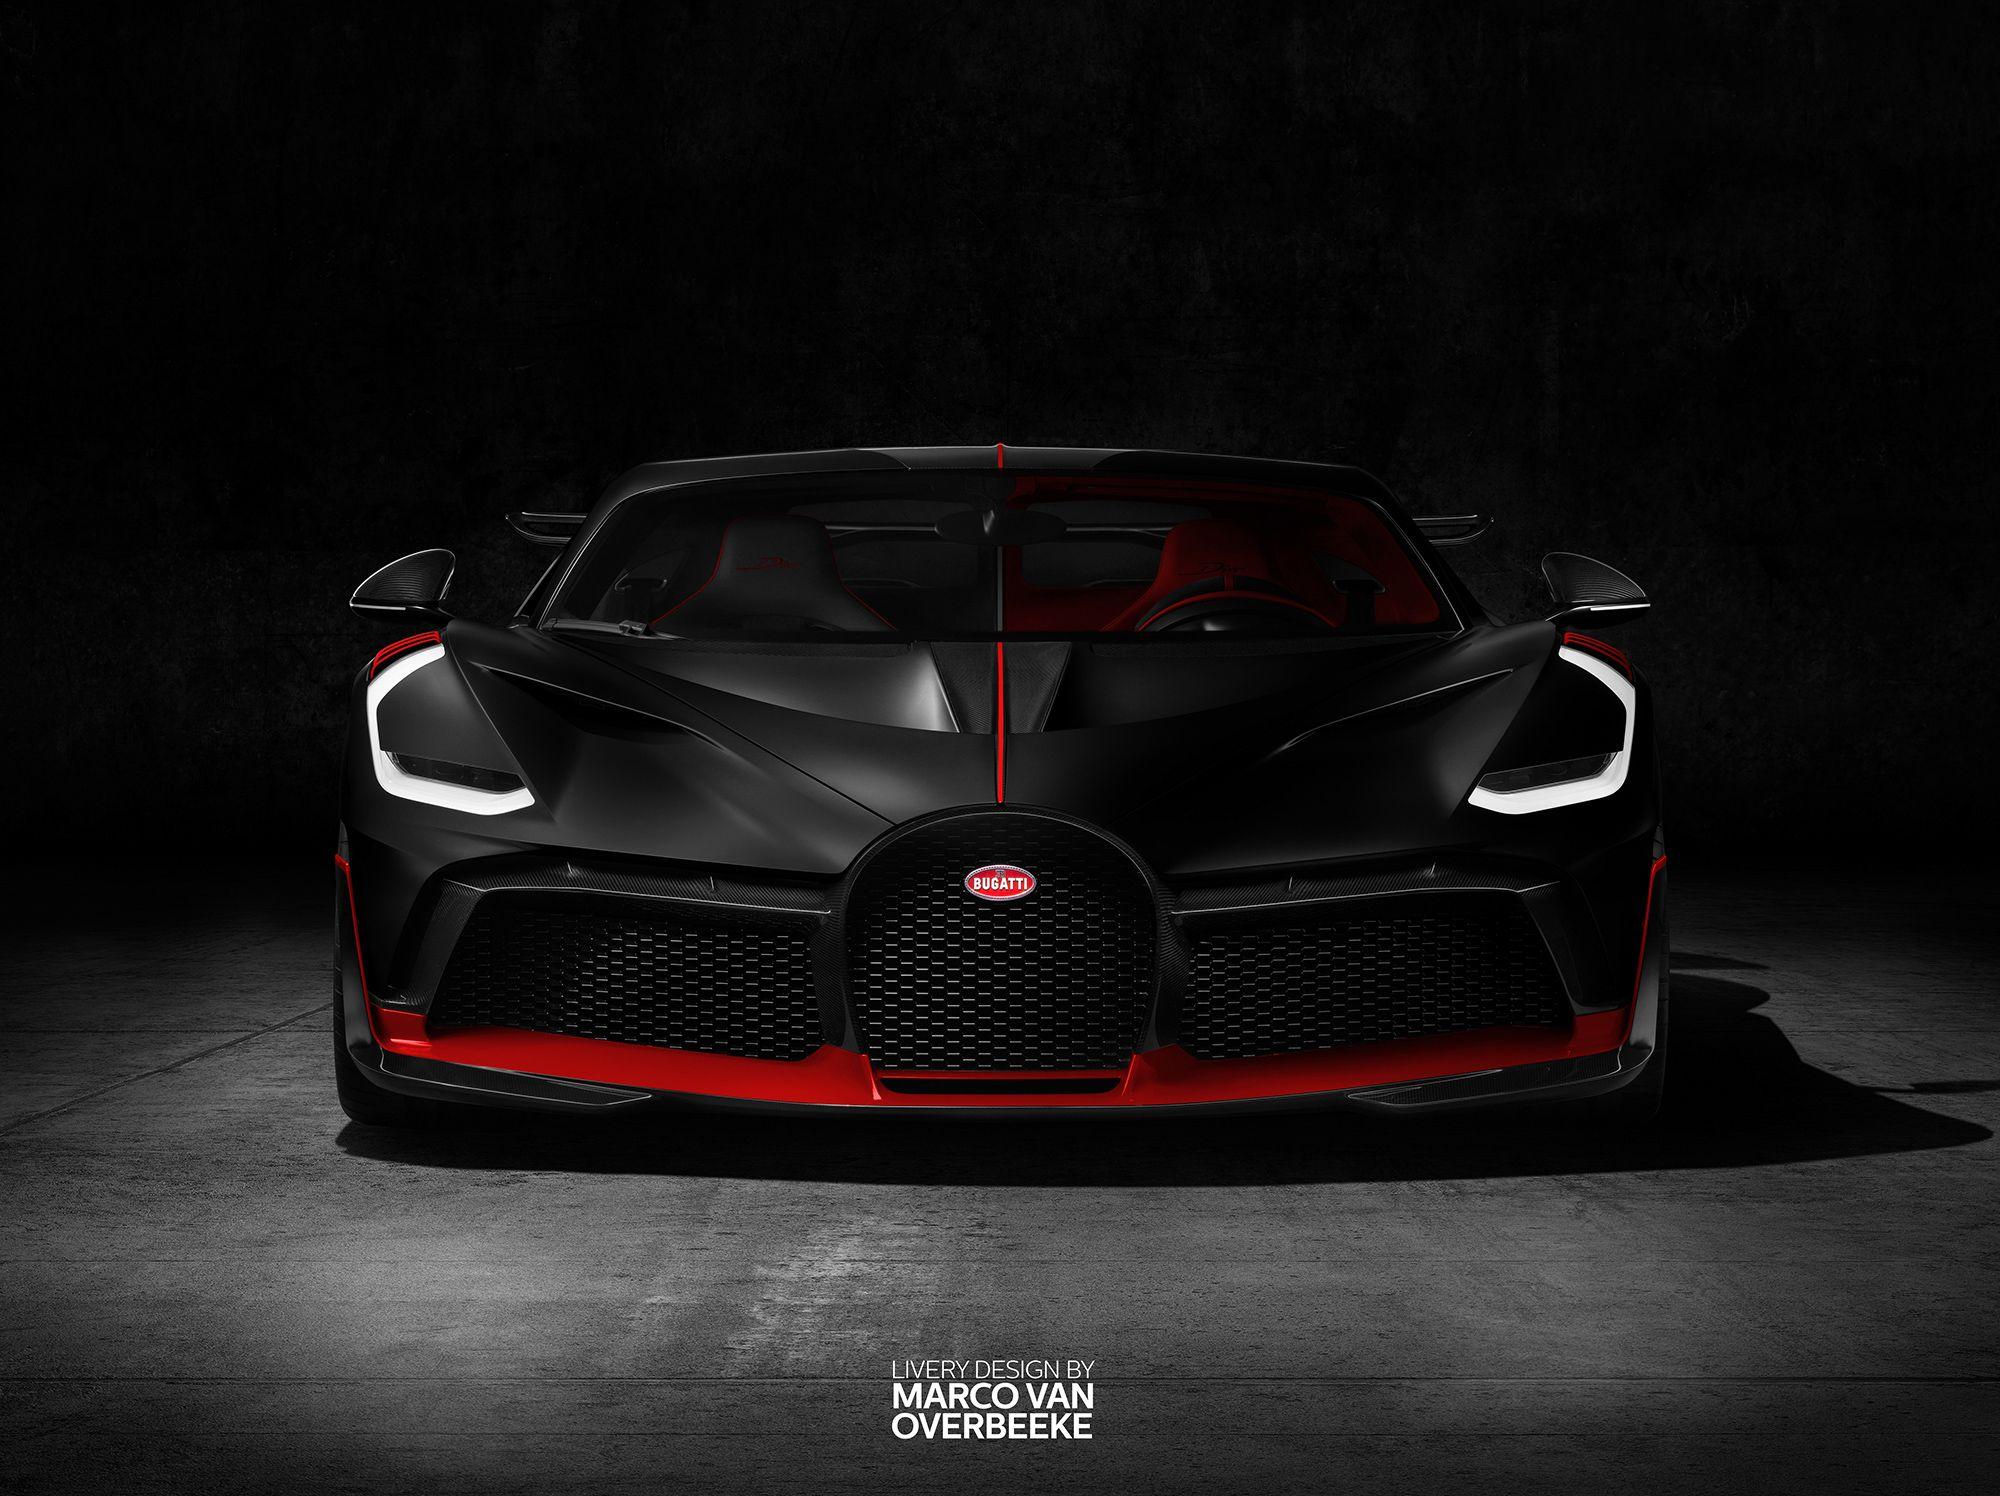 Black Bugatti Wallpaper Hd